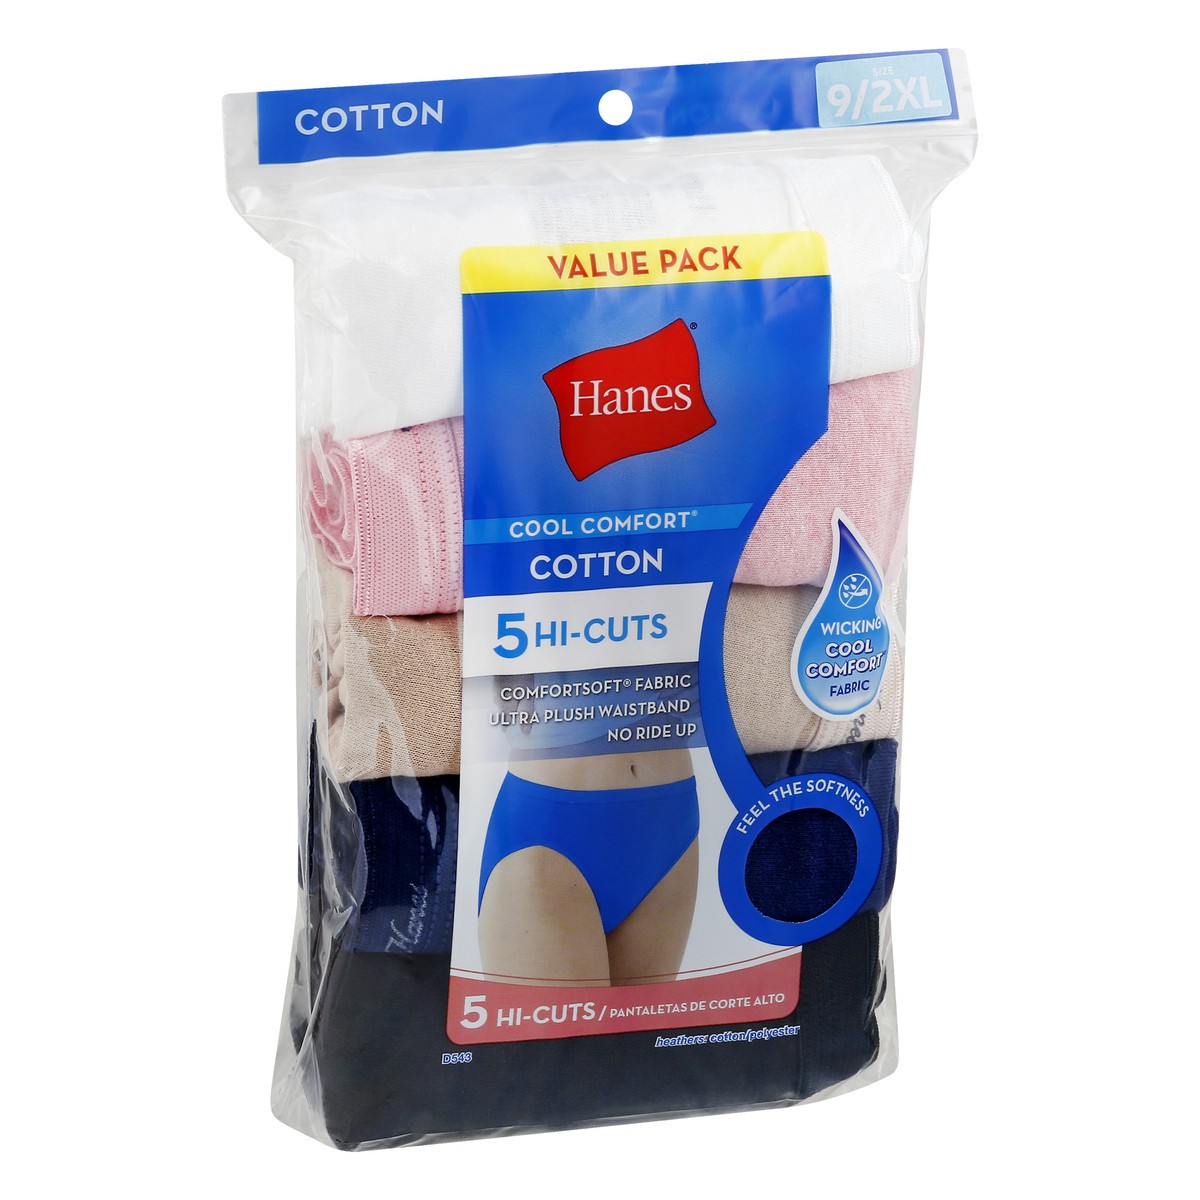 slide 9 of 10, Hanes Cool Comfort Value Pack Size 9/2XL Cotton Hi-Cuts 5 ea, 5 ct